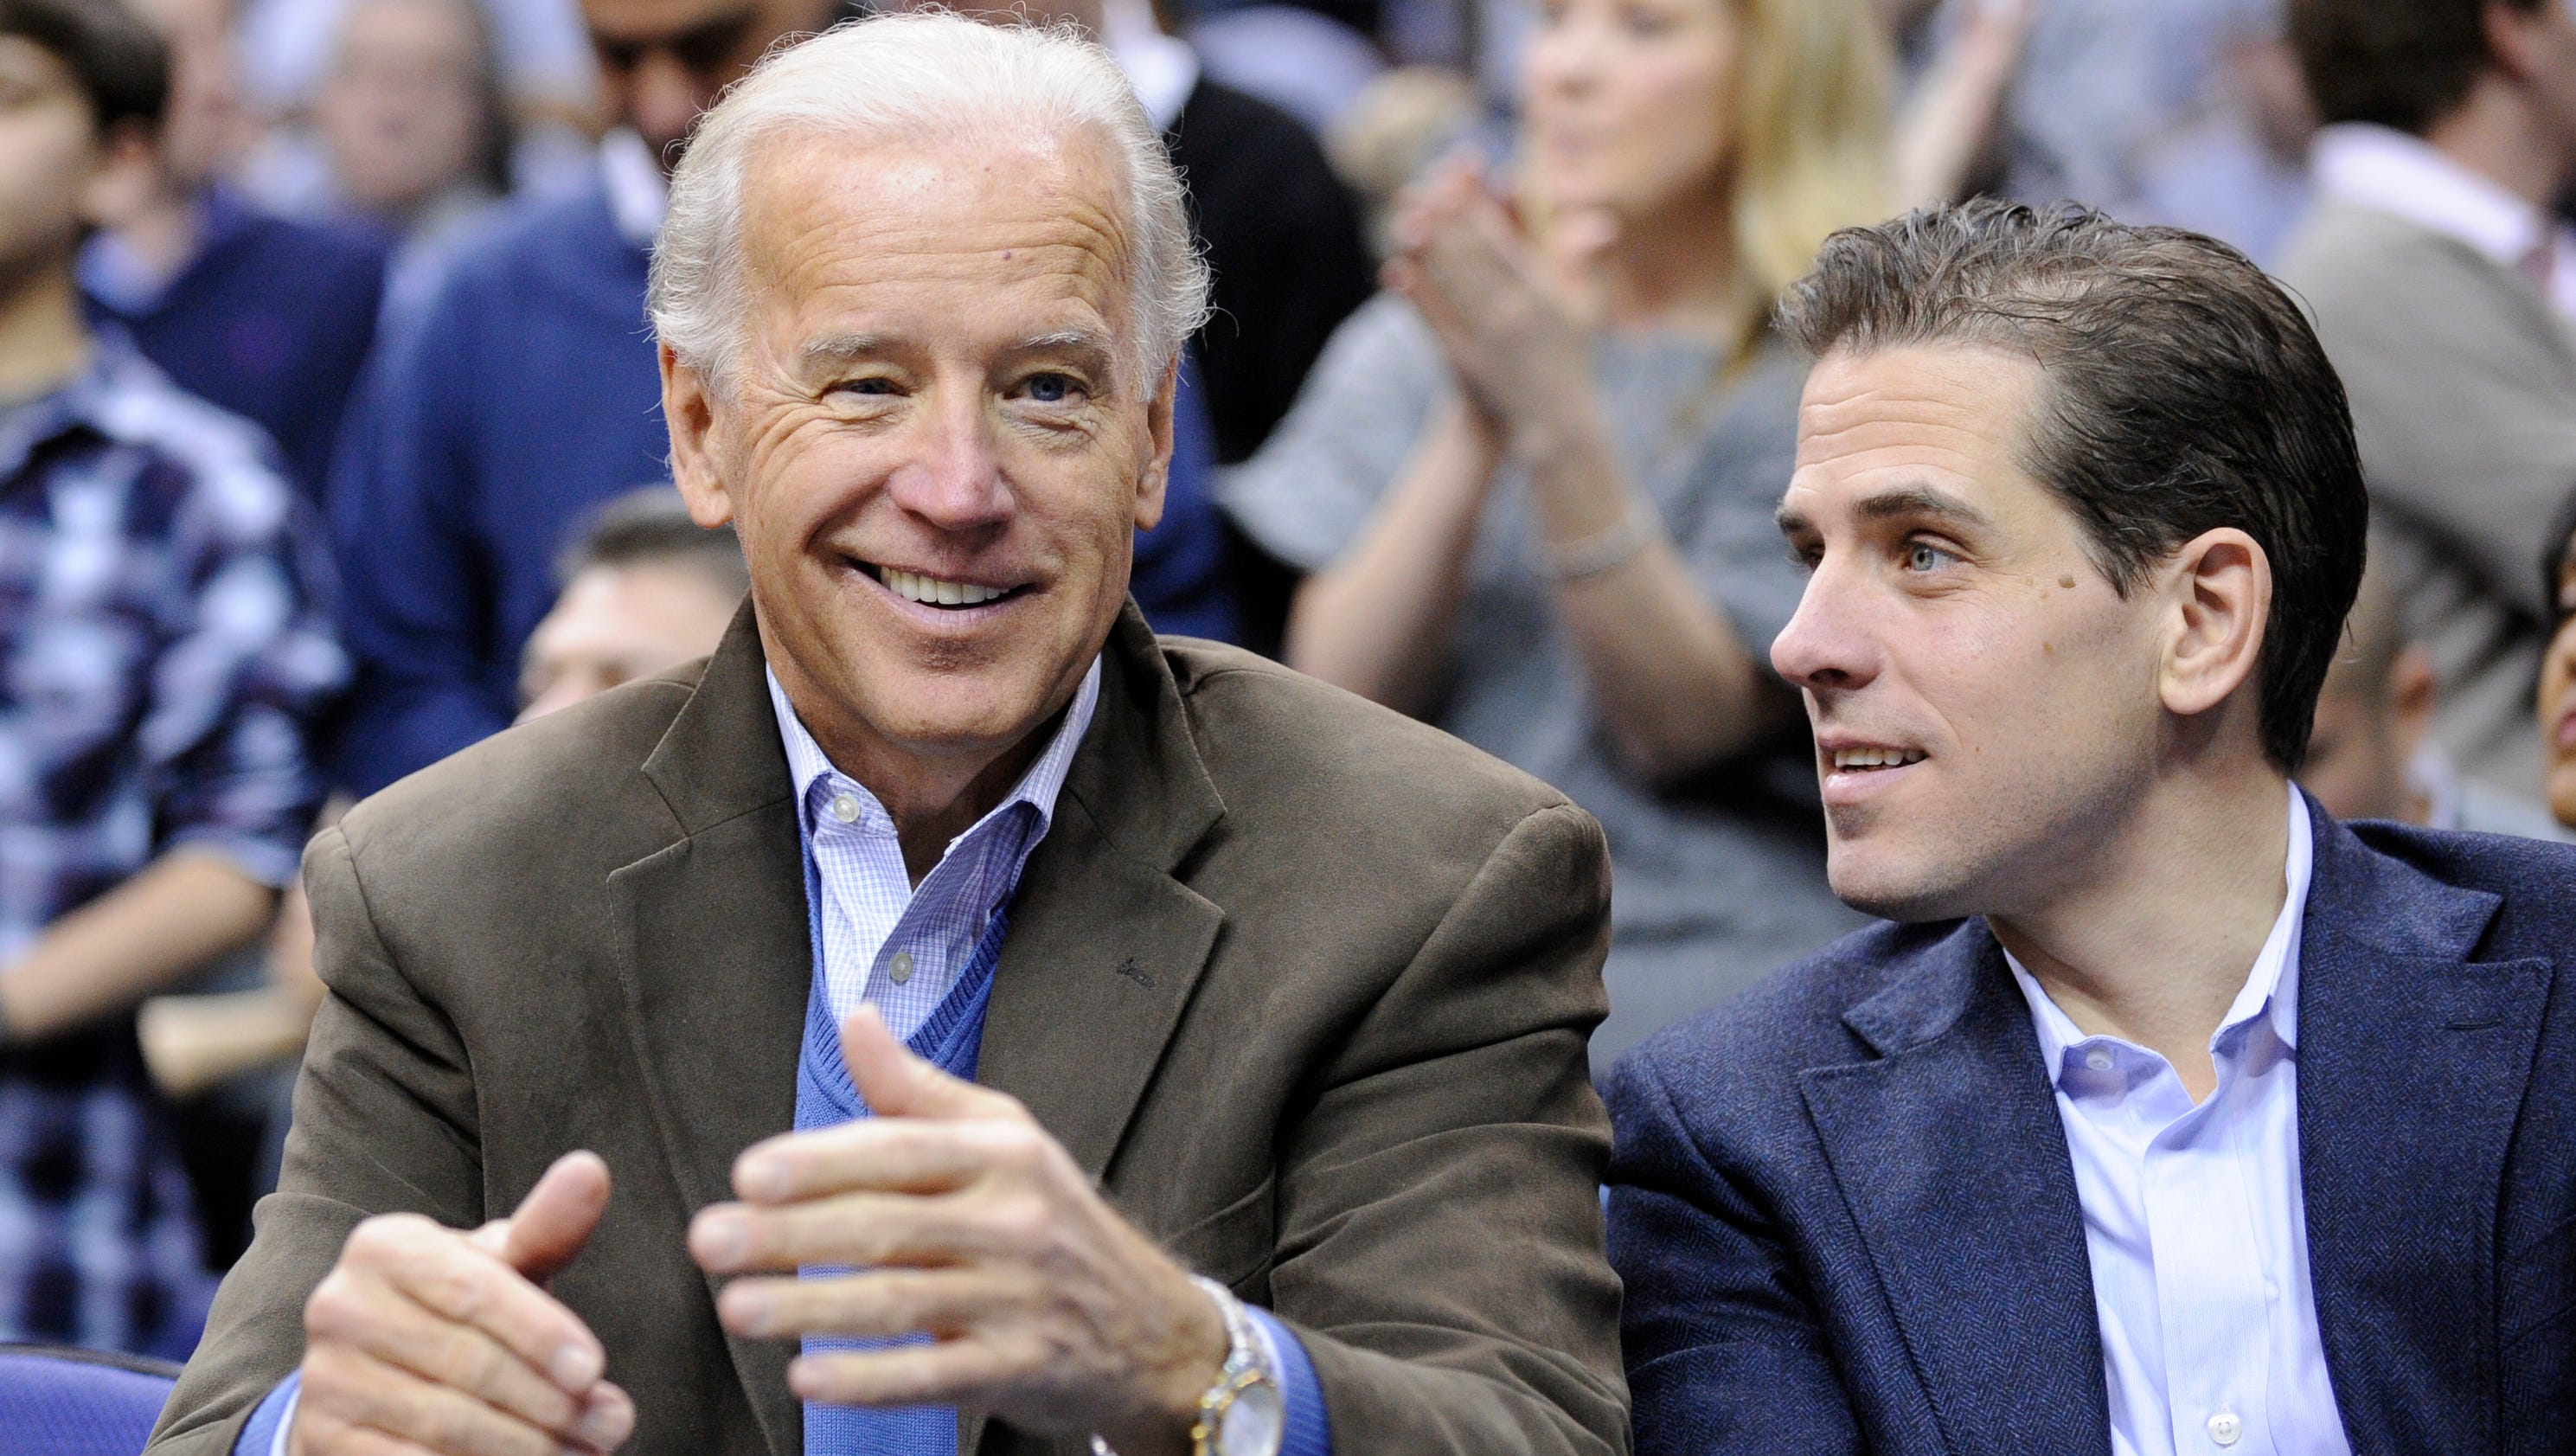 Can Joe Biden’s family endure one last campaign? - The Boston Globe